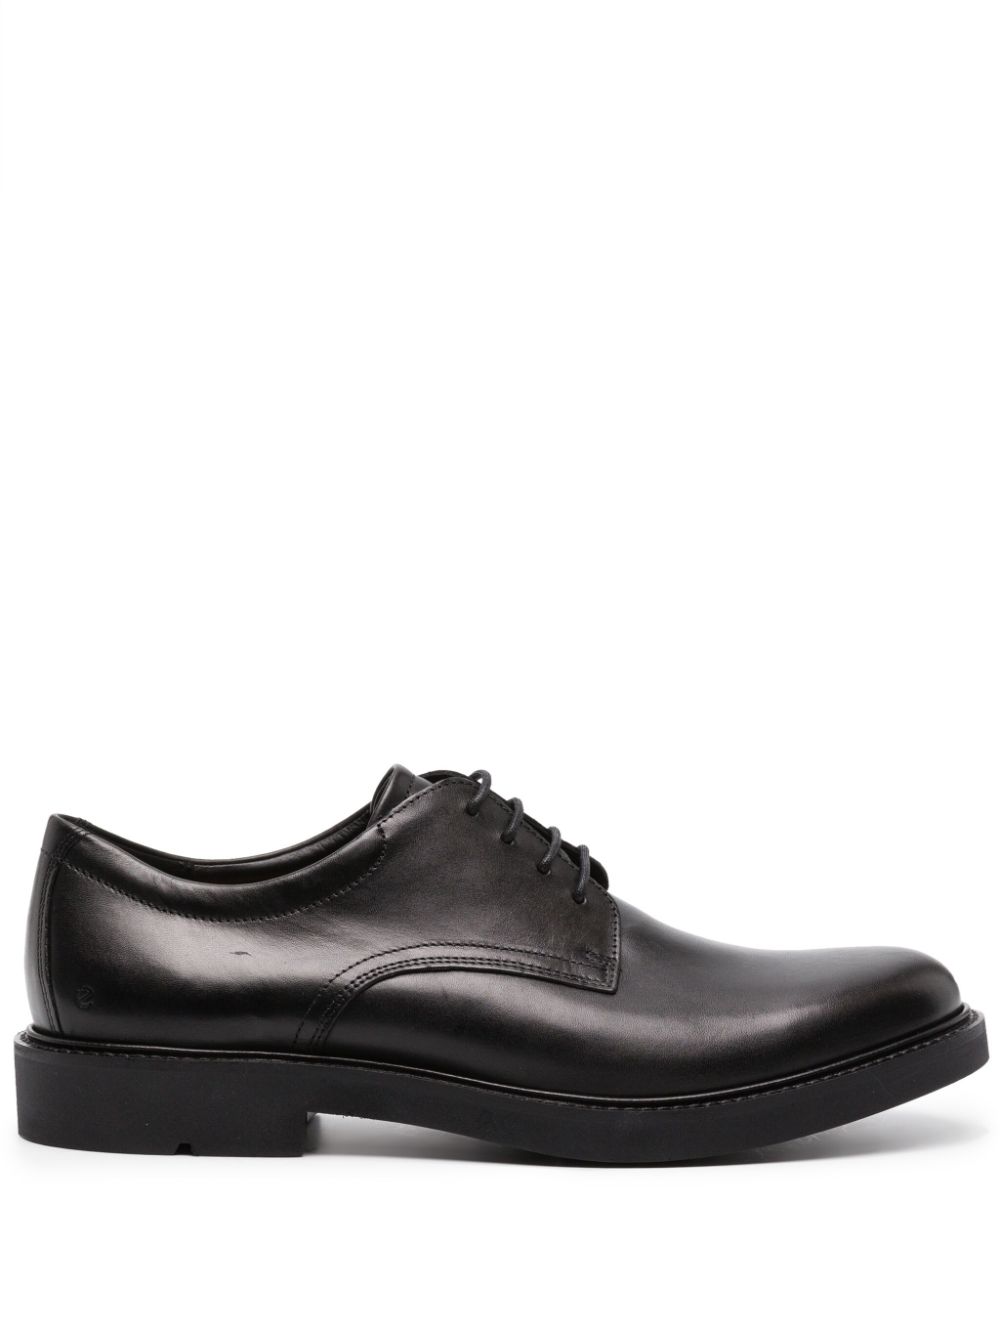 ECCO Metropole London leather derby shoes - Black von ECCO